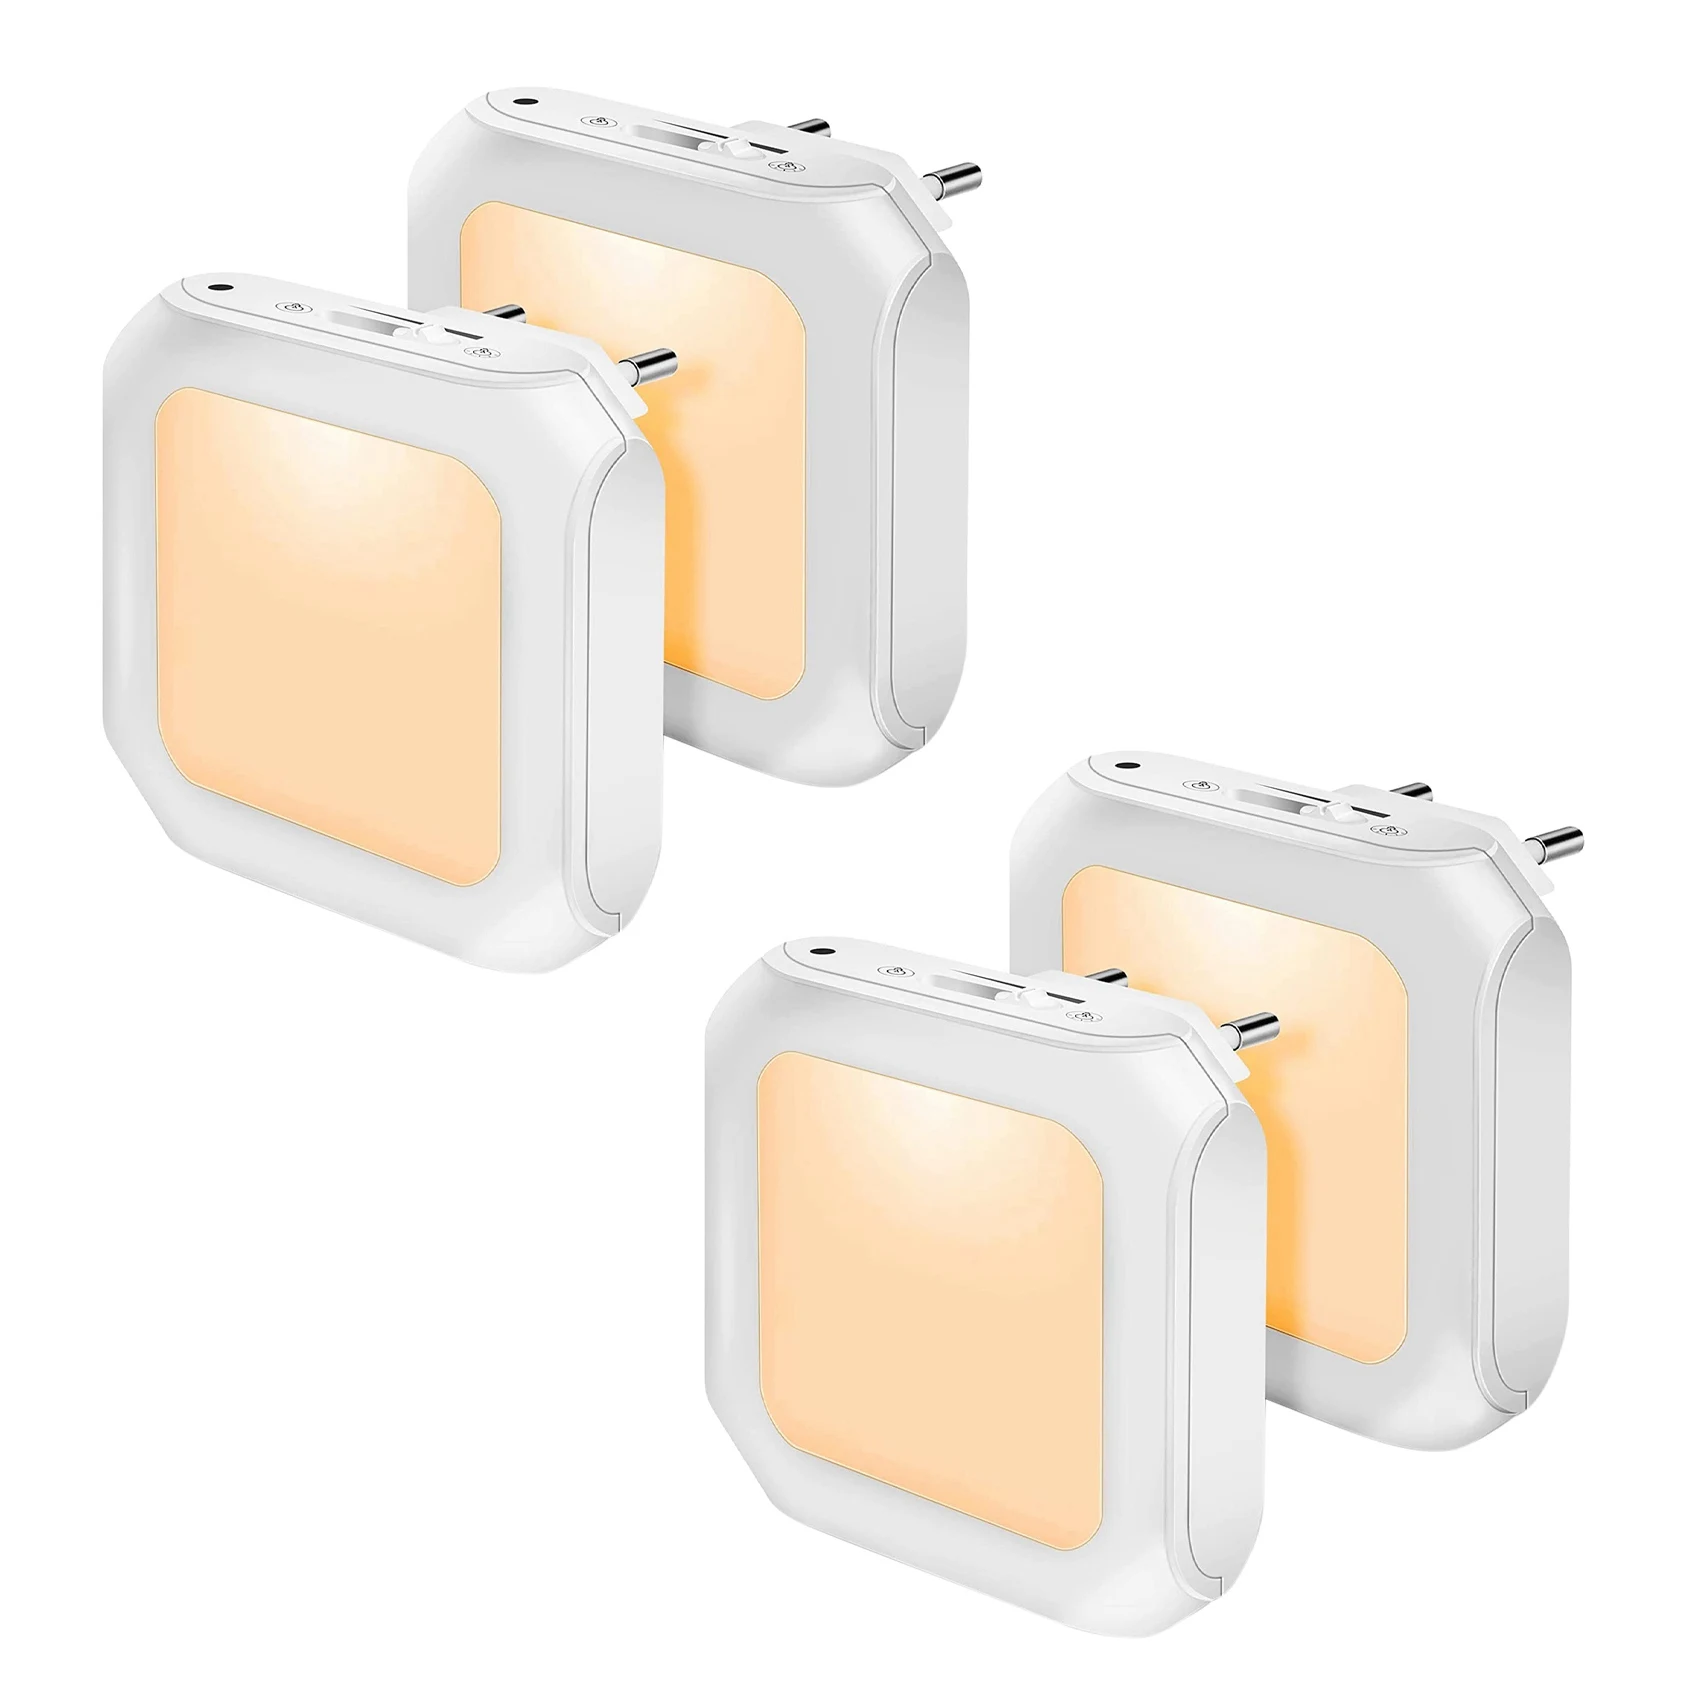 

2X LED Night Light Children Night Light Socket with Twilight Sensor Brightness Infinitely Adjustable Bedroom Warm White